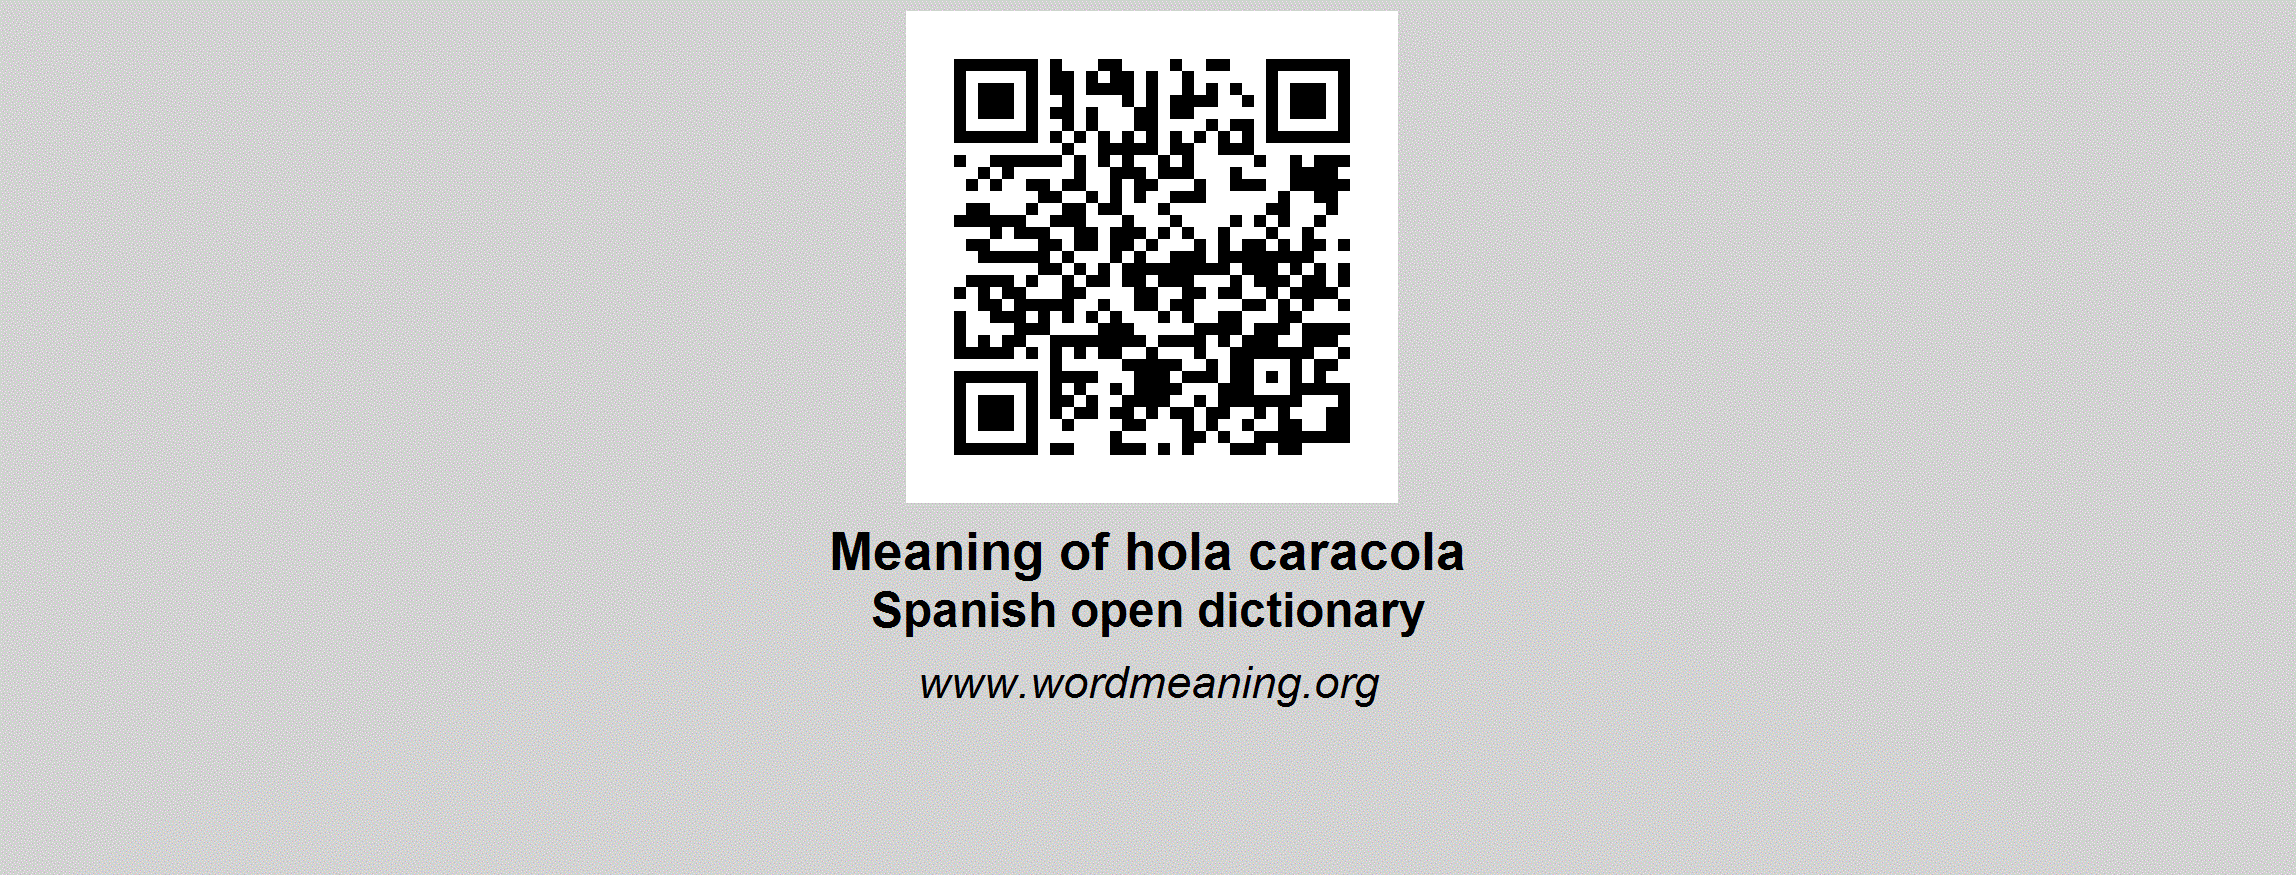 HOLA CARACOLA - Spanish open dictionary